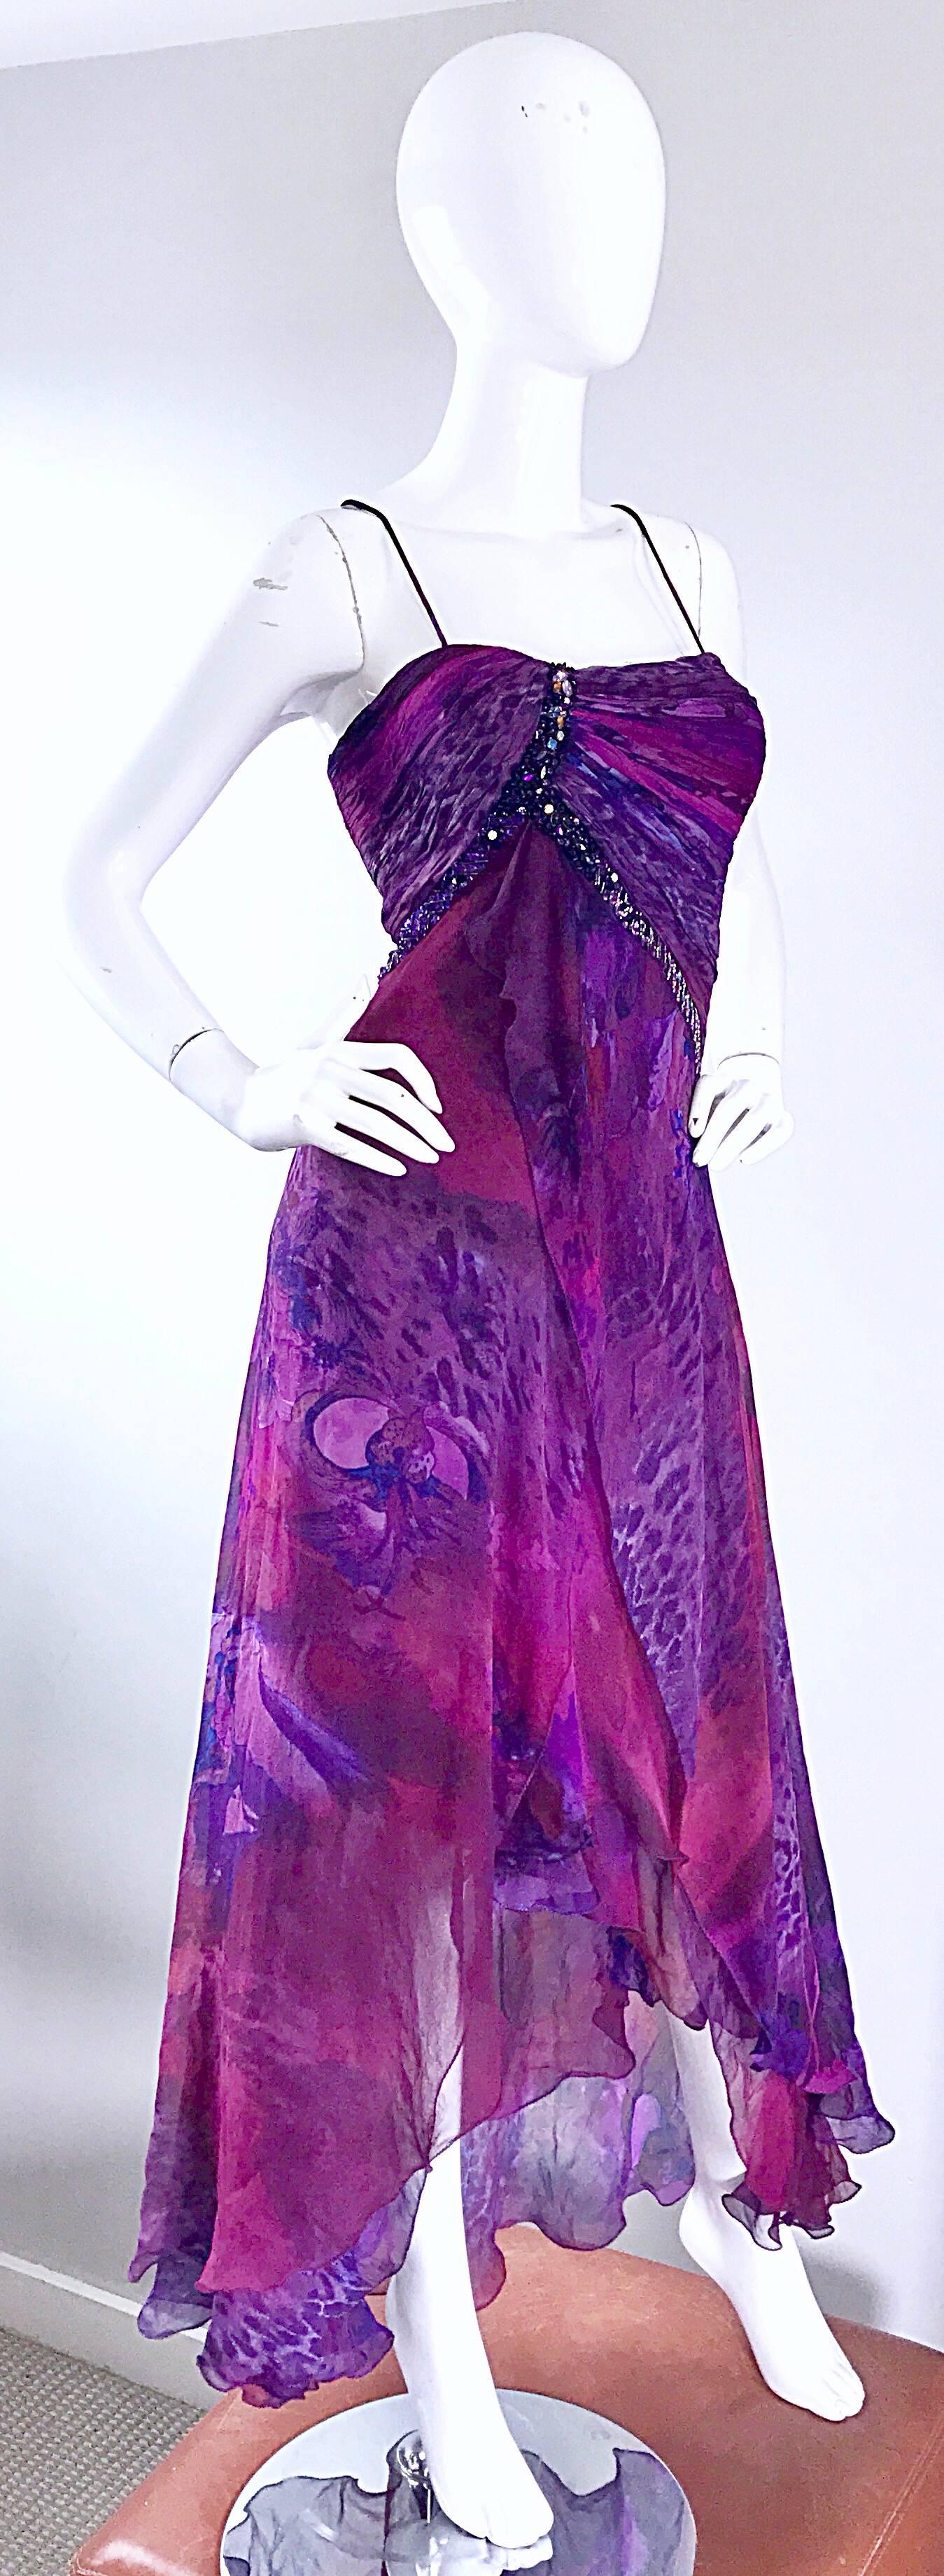 purple dress size 14